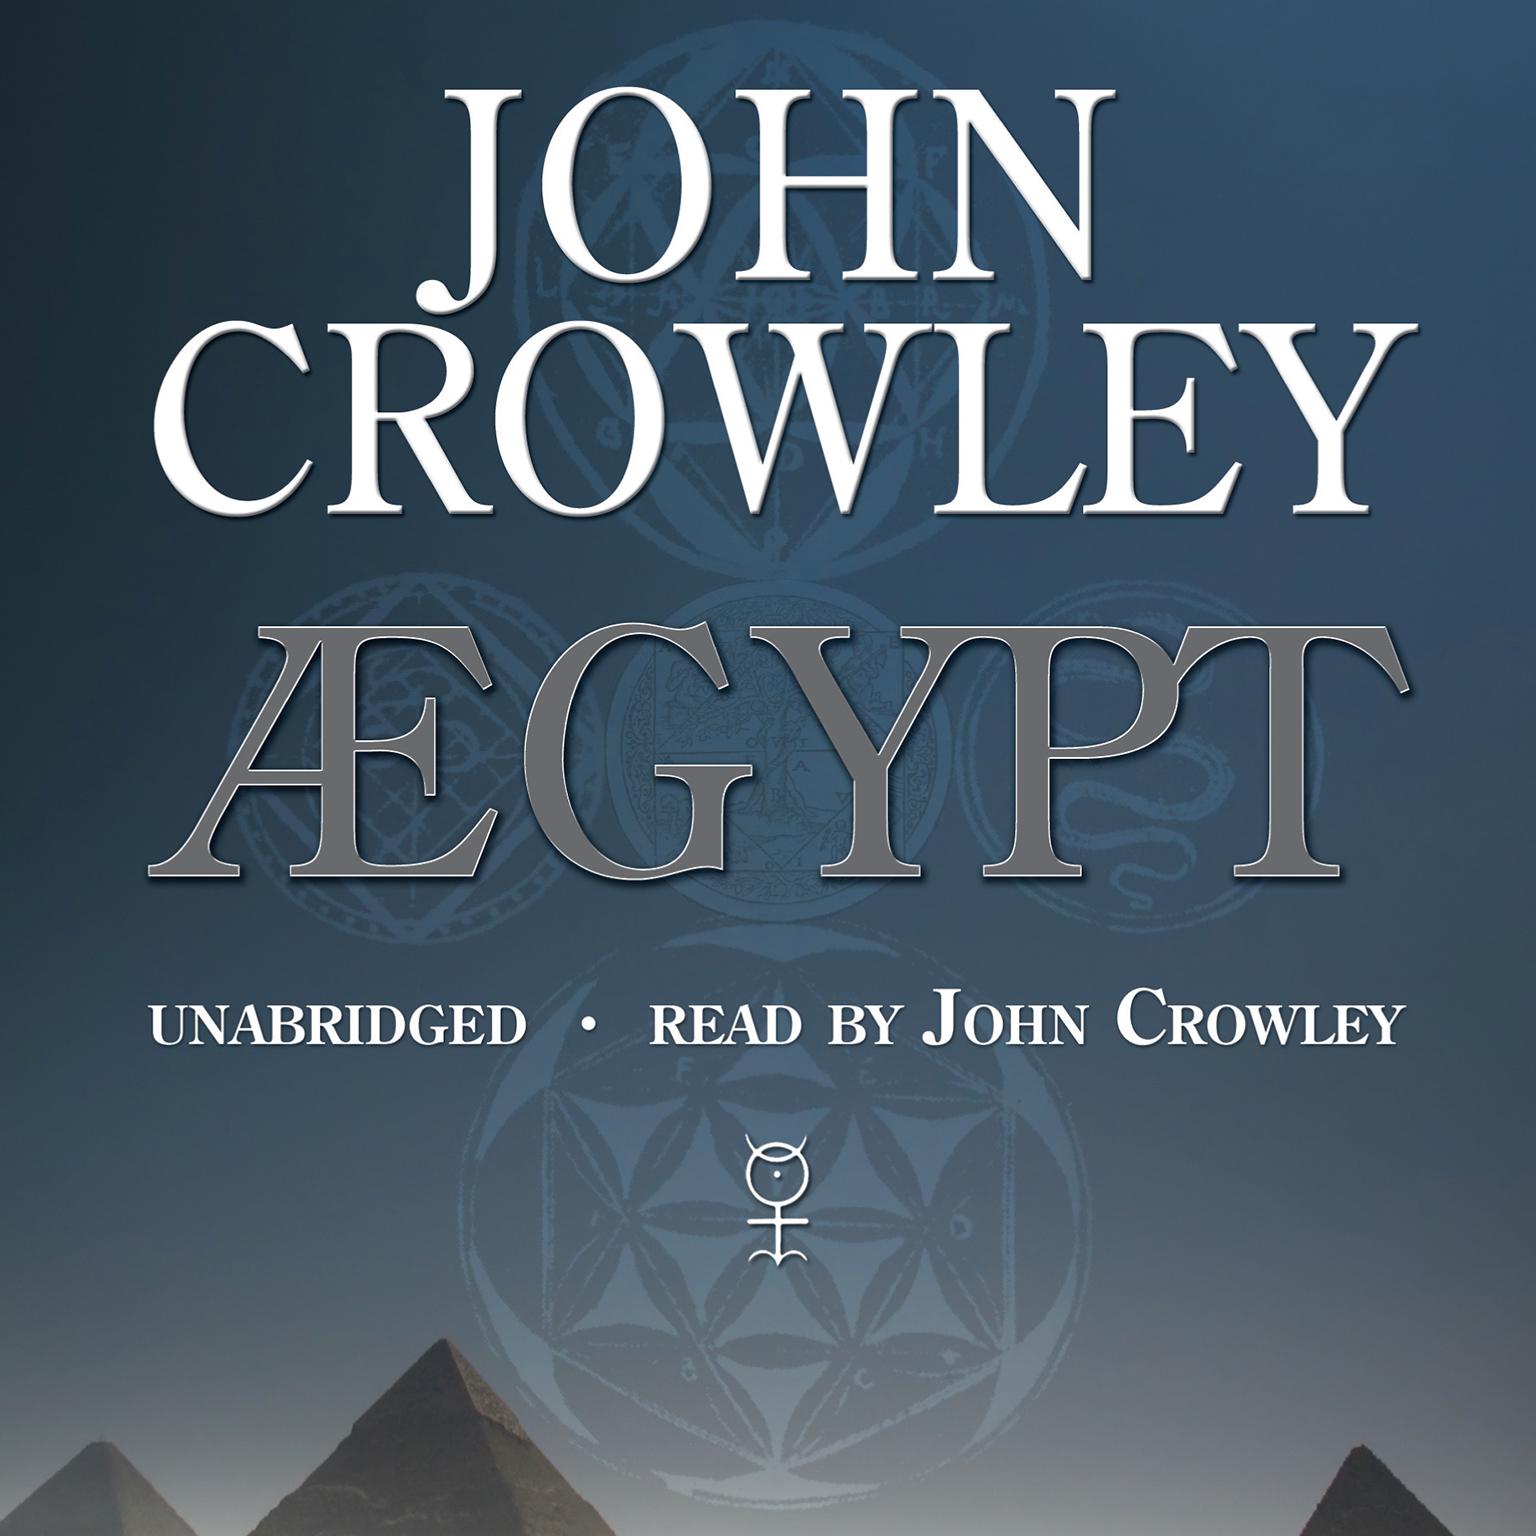 Aegypt Audiobook, by John Crowley